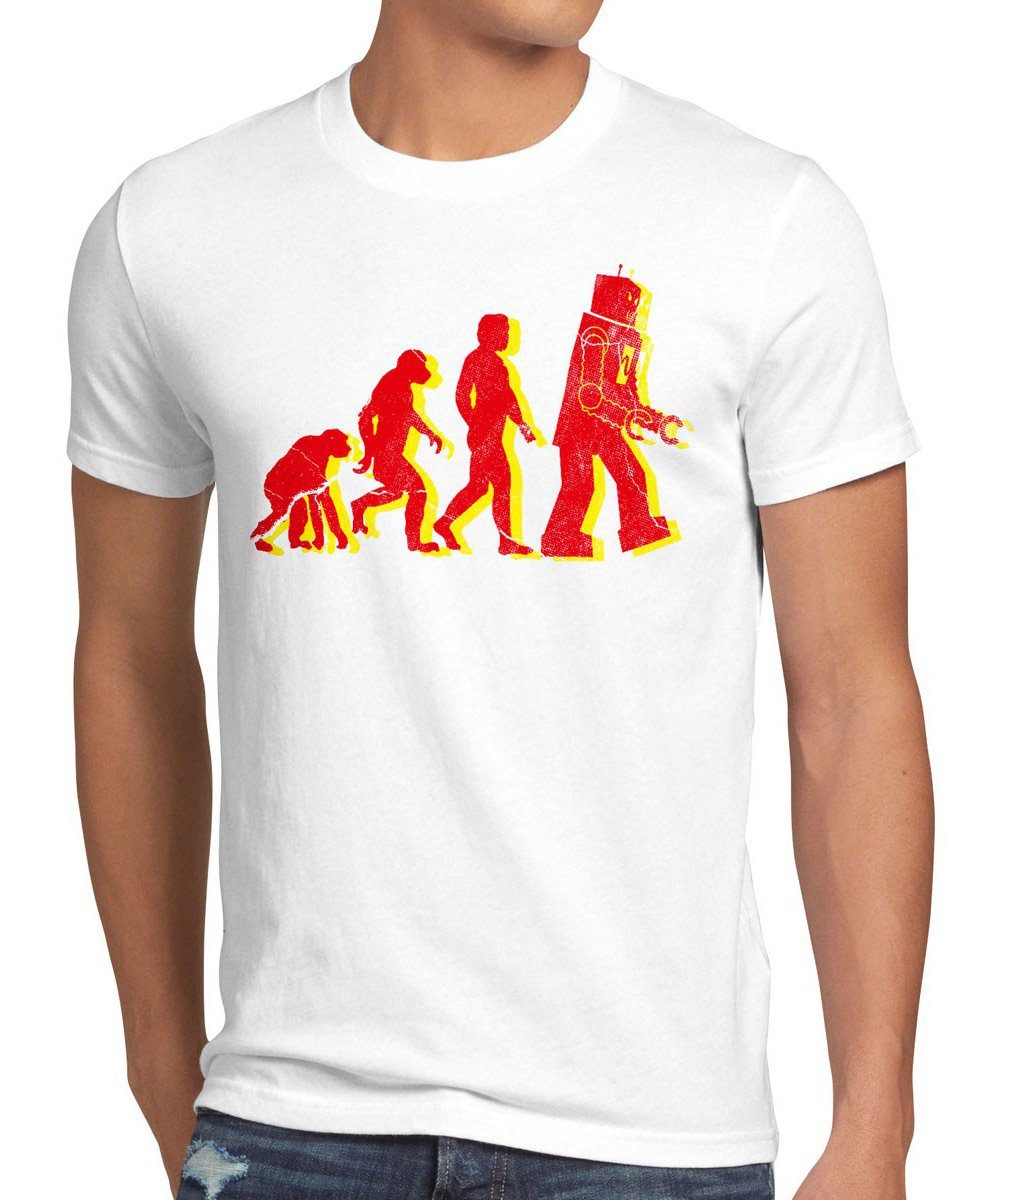 style3 Print-Shirt Herren T-Shirt Evolution big bang roboter sheldon theory cooper darwin neu robot weiß | T-Shirts